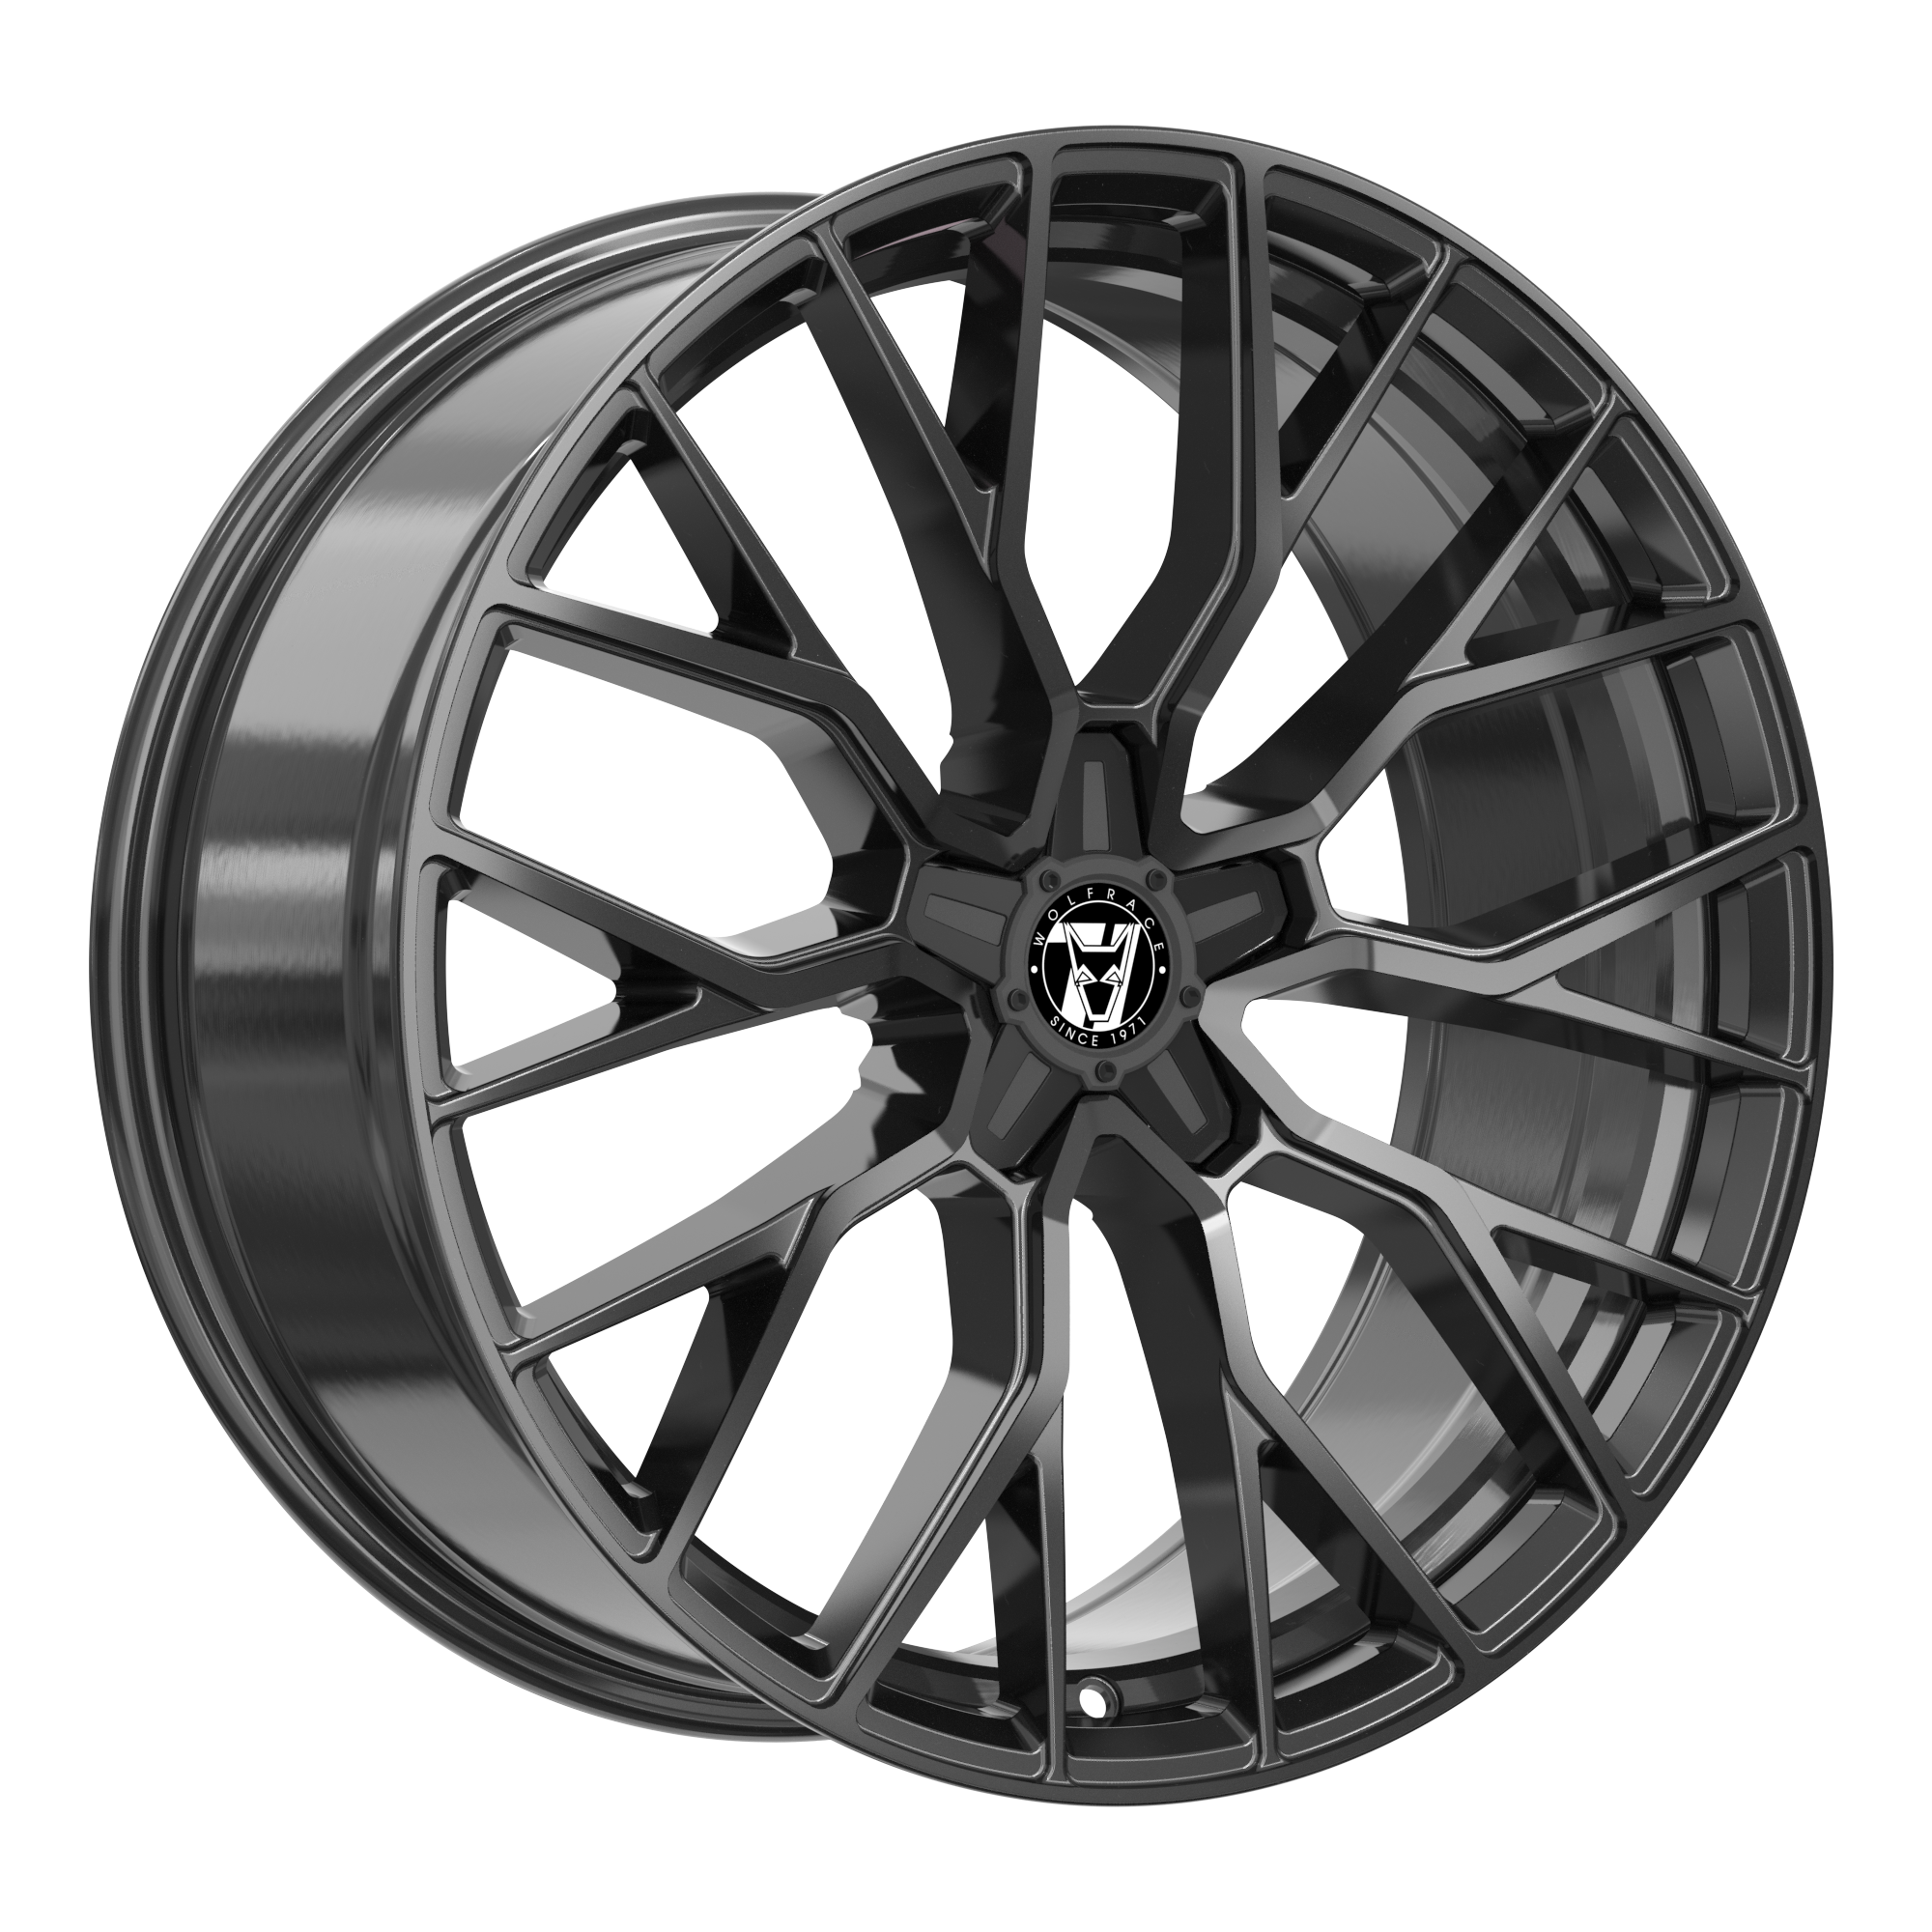 Demon Wheels 71 Munich GTR Black Edition [9.5x22] -5x130- ET 35